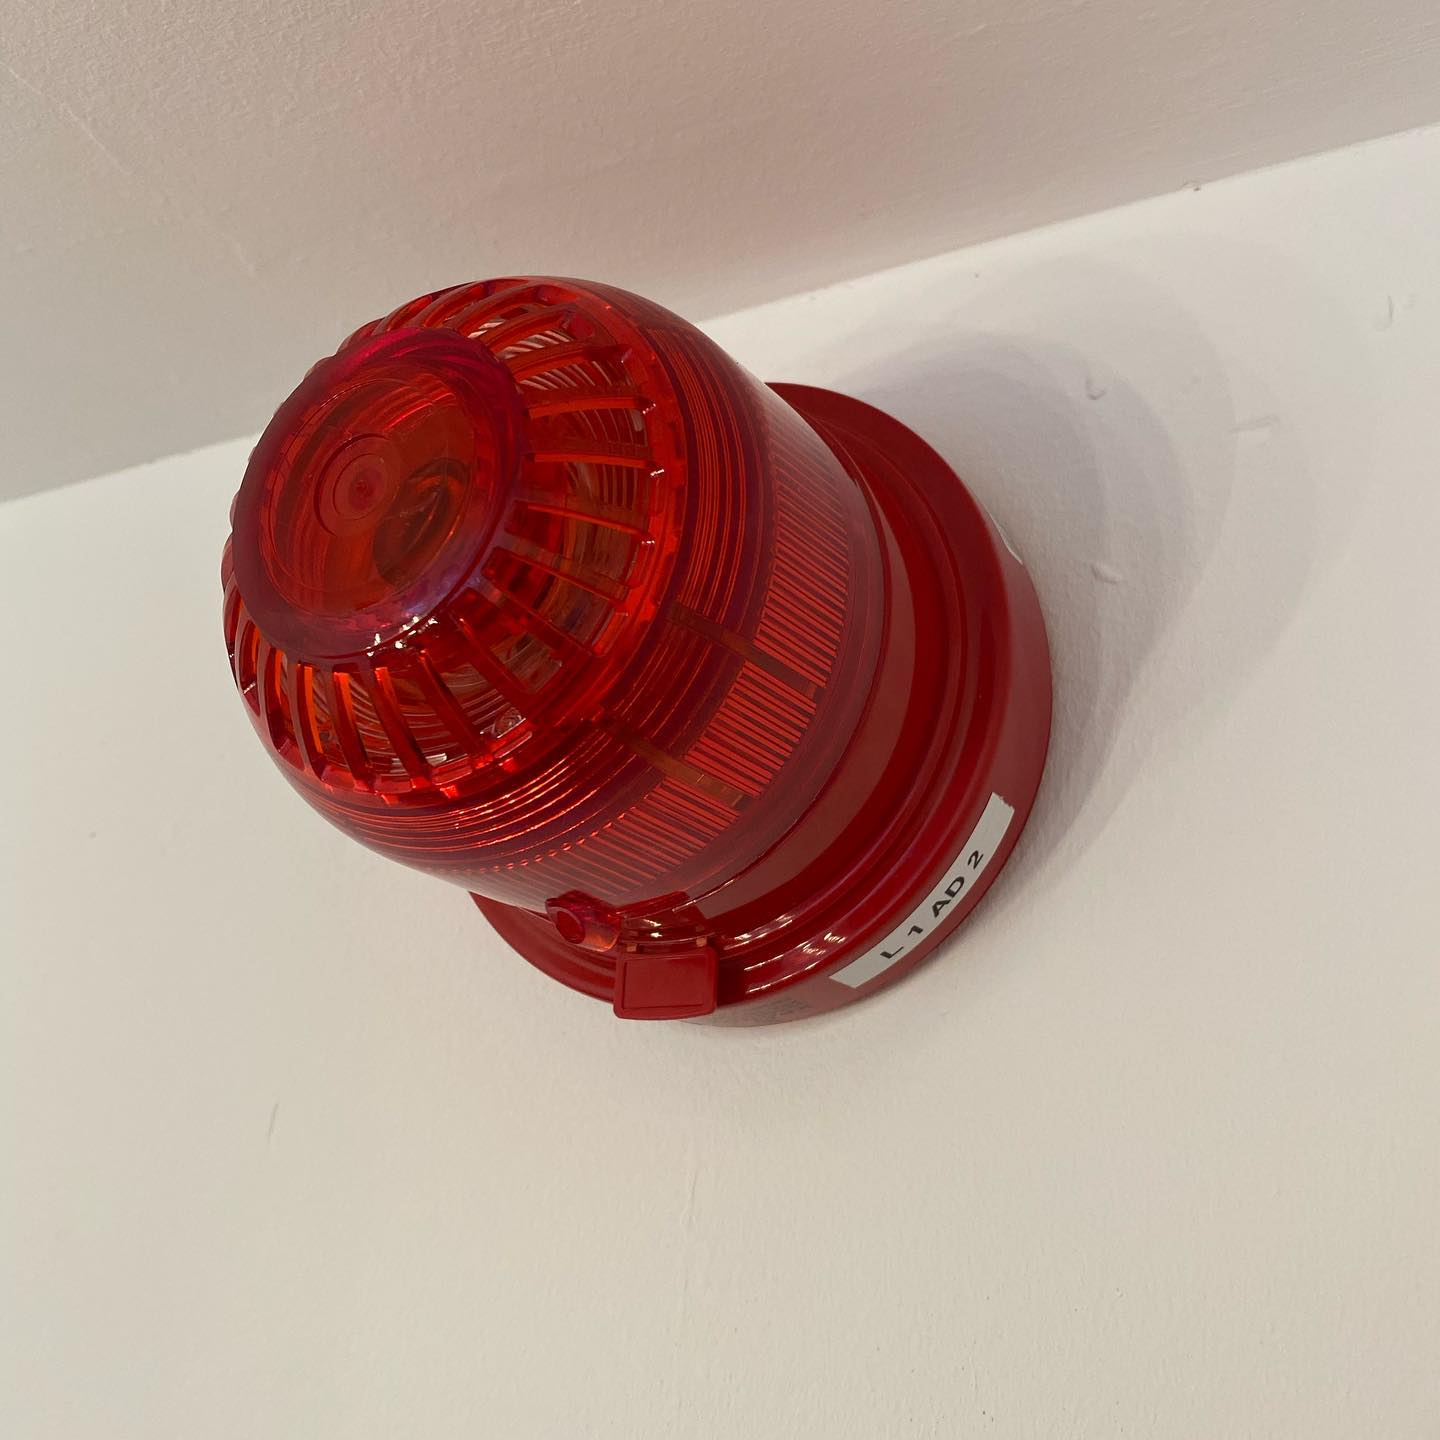 Hybrid Fire Alarm Systems Chester